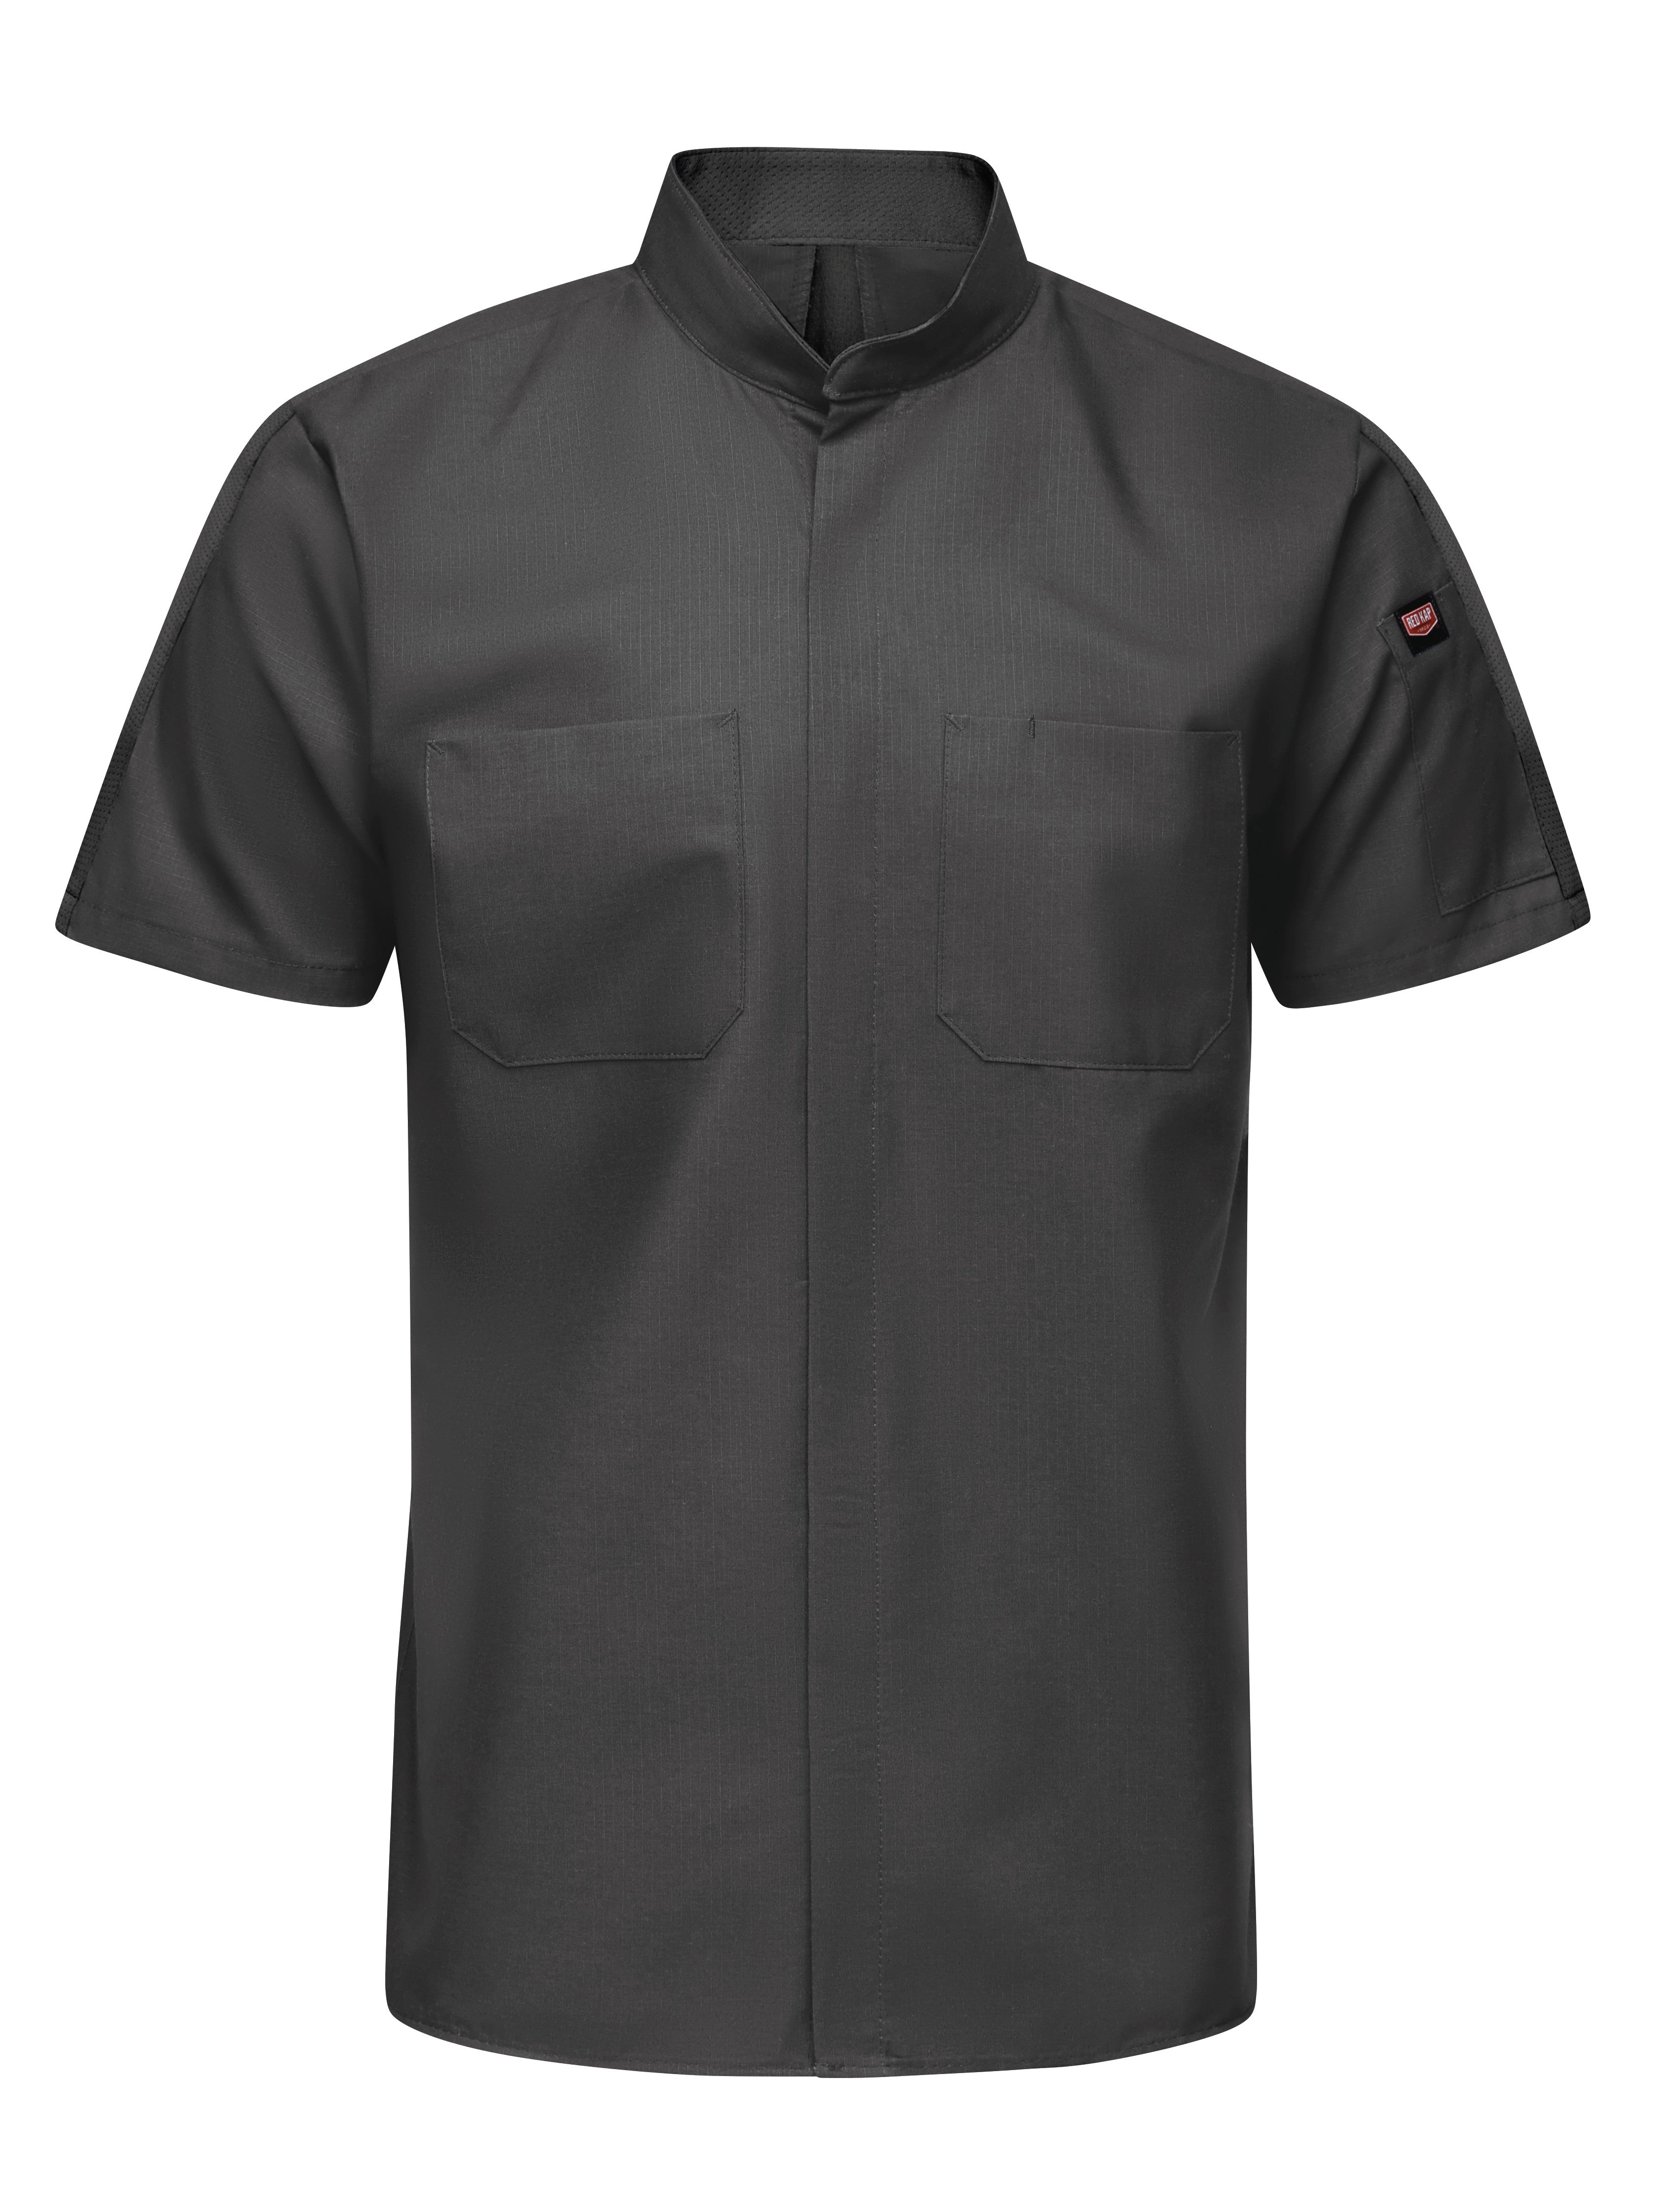 Red Kap Men's Short Sleeve Pro+ Work Shirt with OilBlok and Mimix